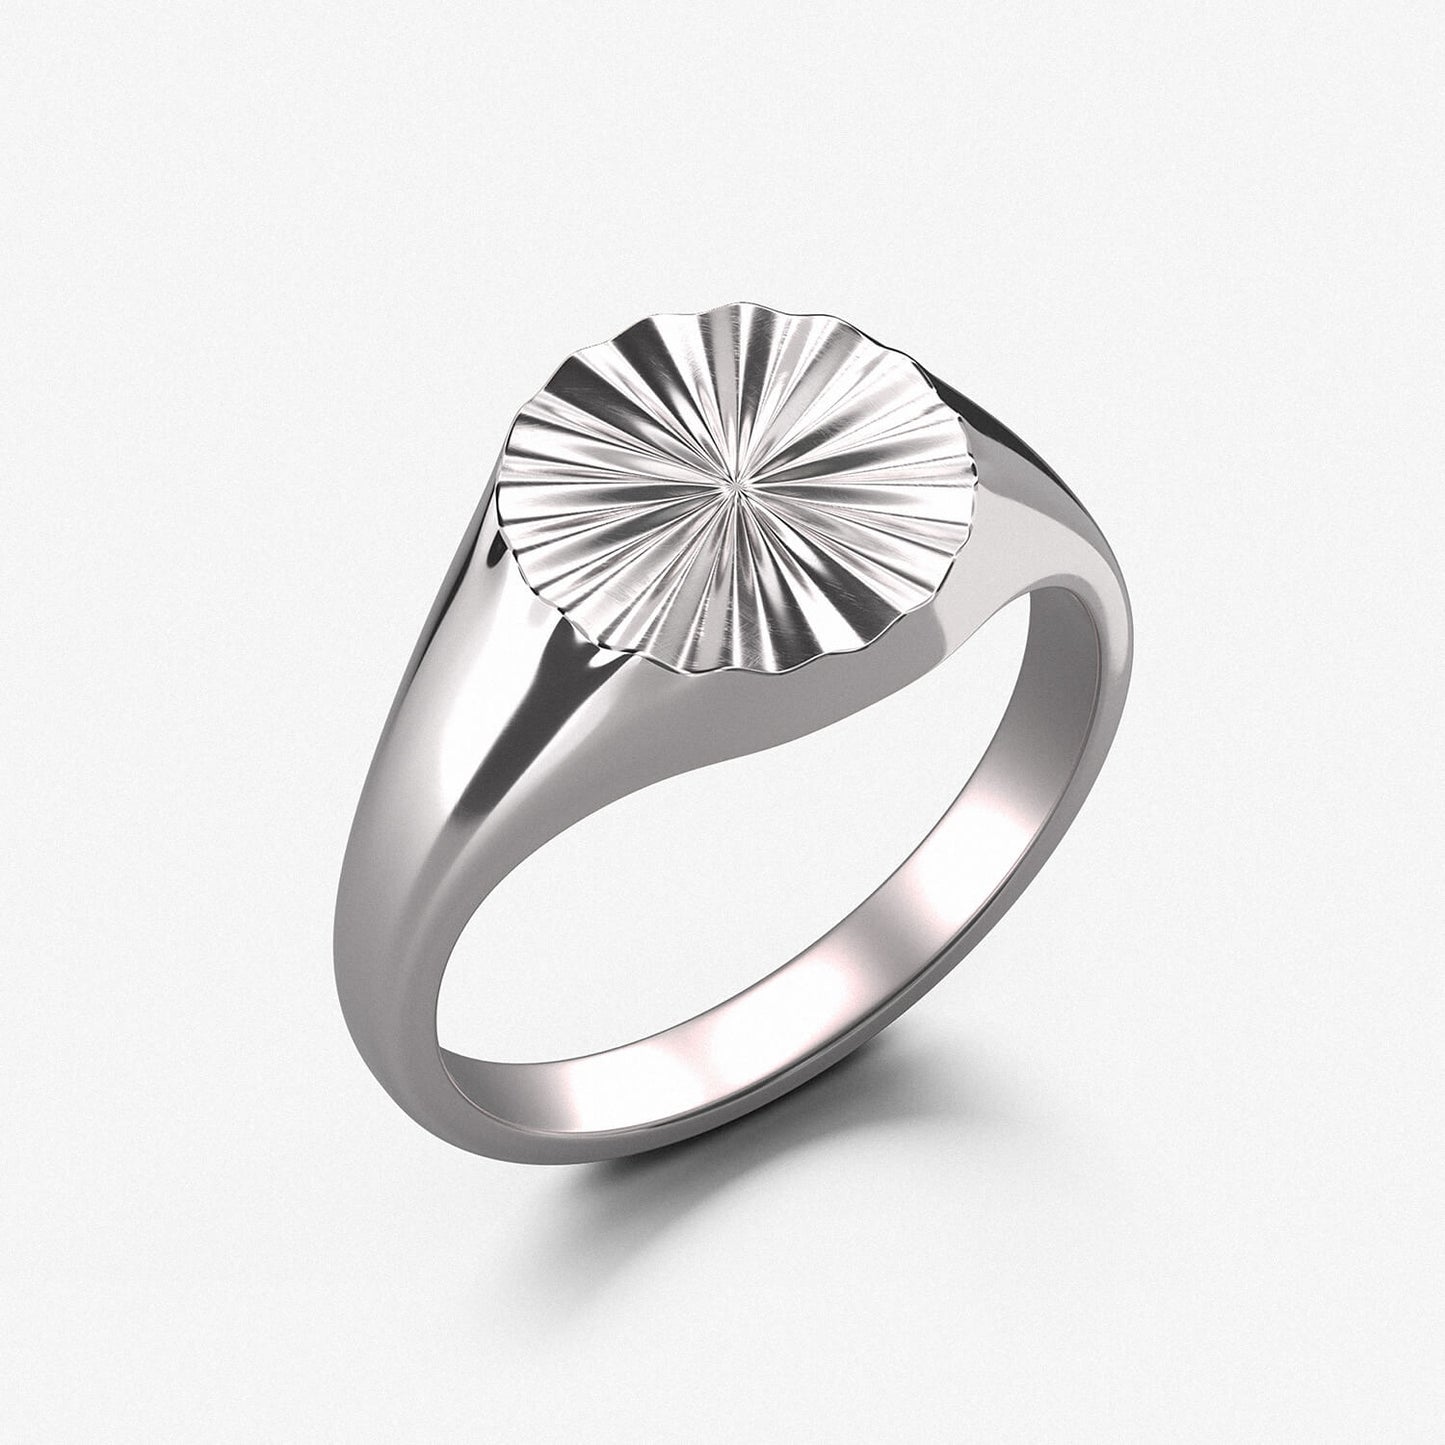 "Sunshine" Signet Ring / 925 Sterling Silver